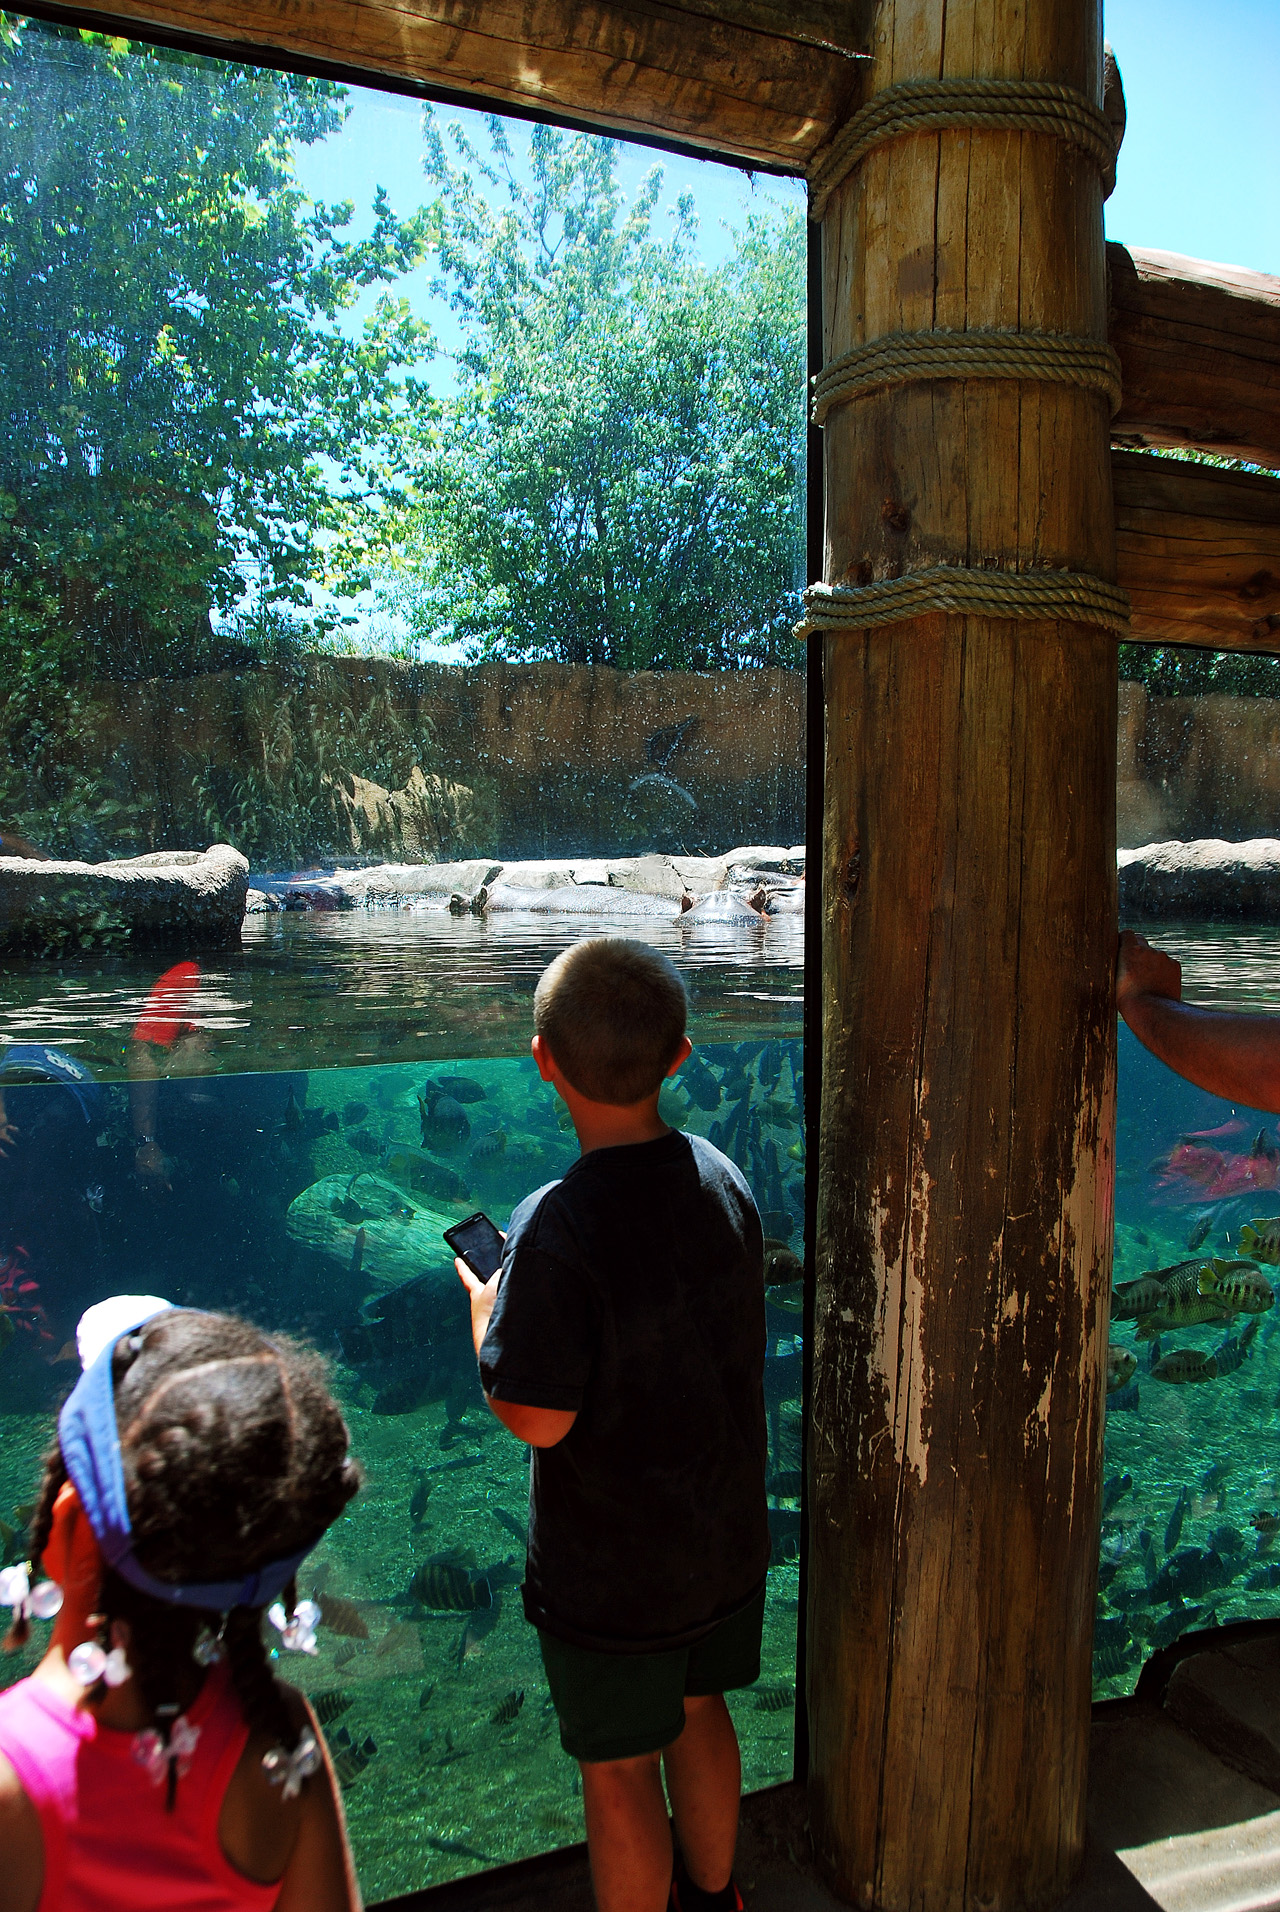 2012-06-22, 011, St. Louis Zoo